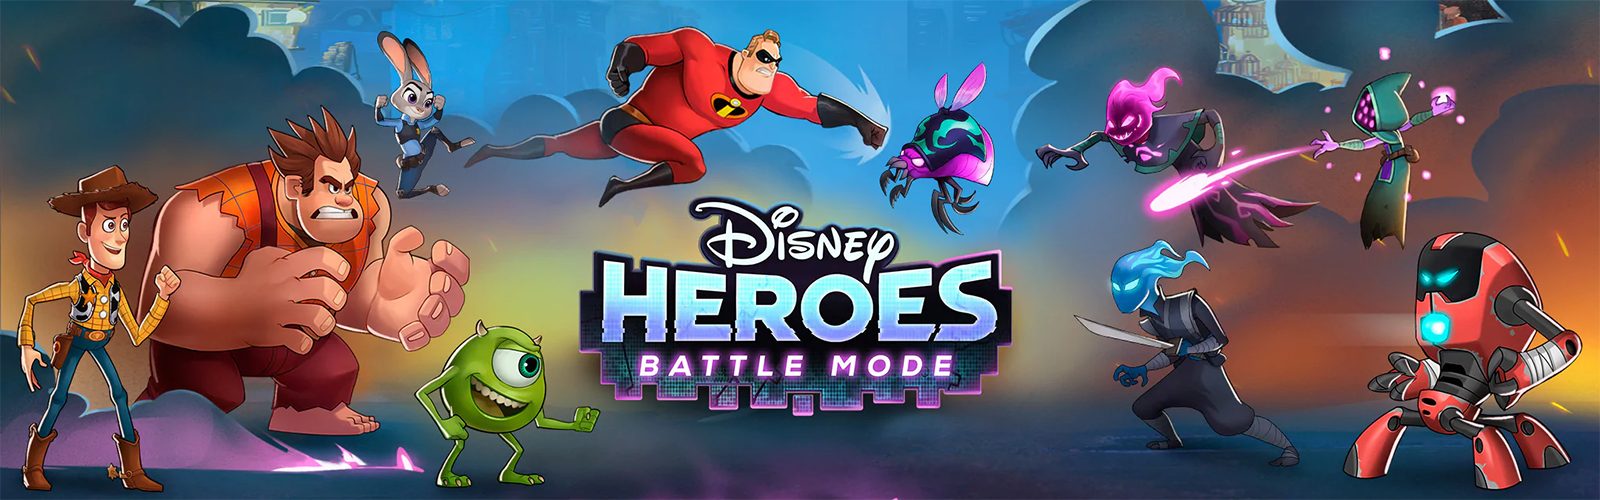 disney heroes battle mode mod apk